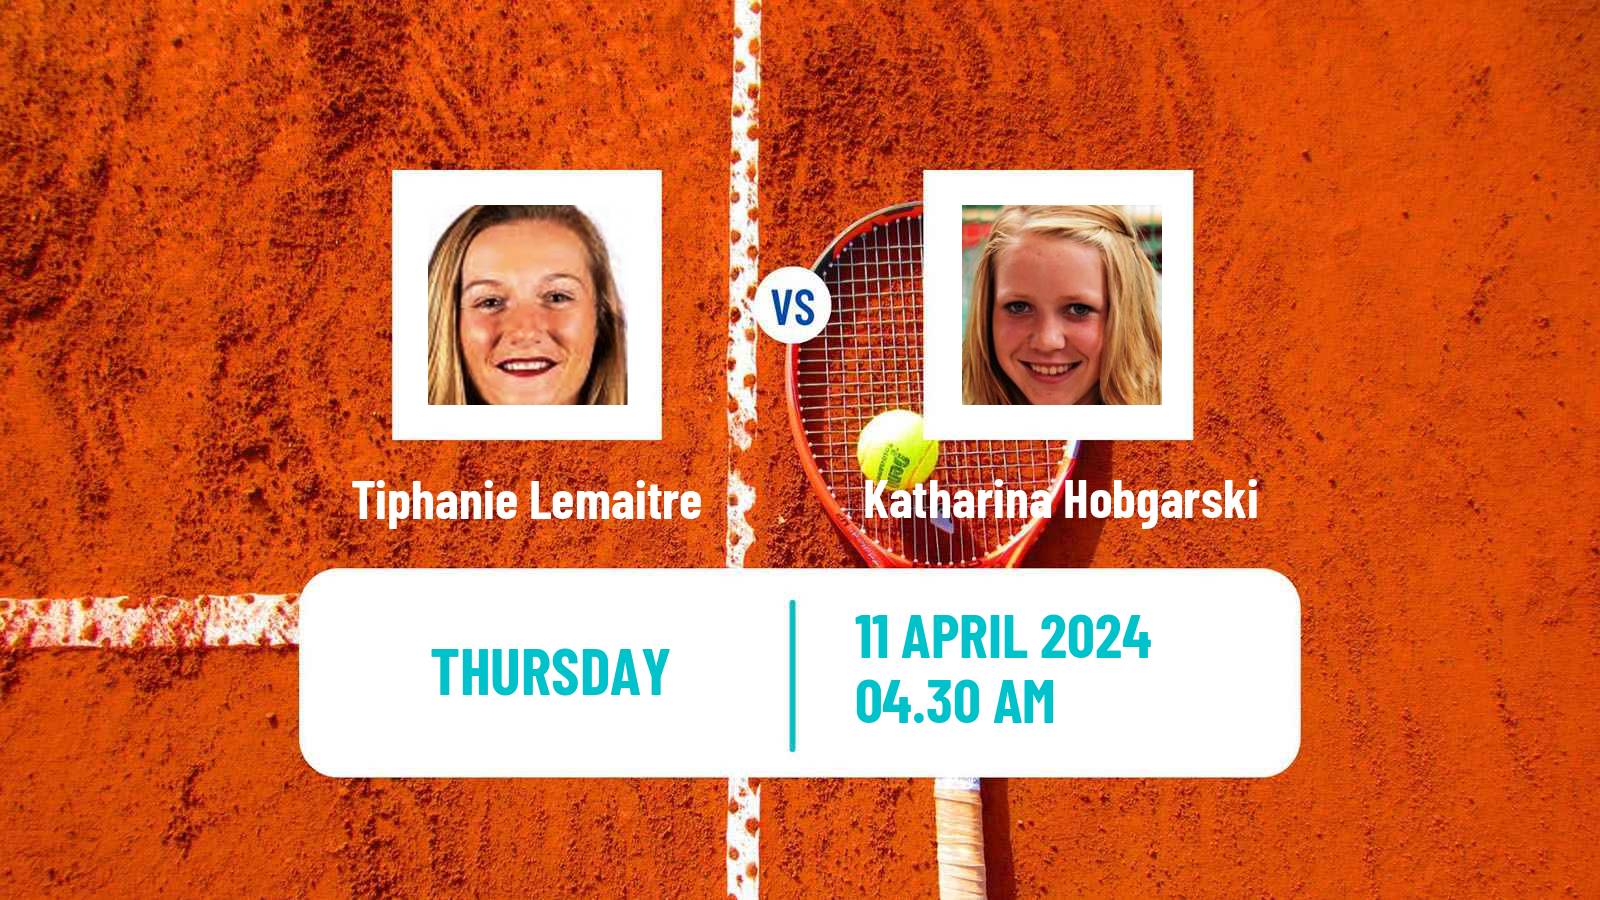 Tennis ITF W35 Hammamet 4 Women Tiphanie Lemaitre - Katharina Hobgarski